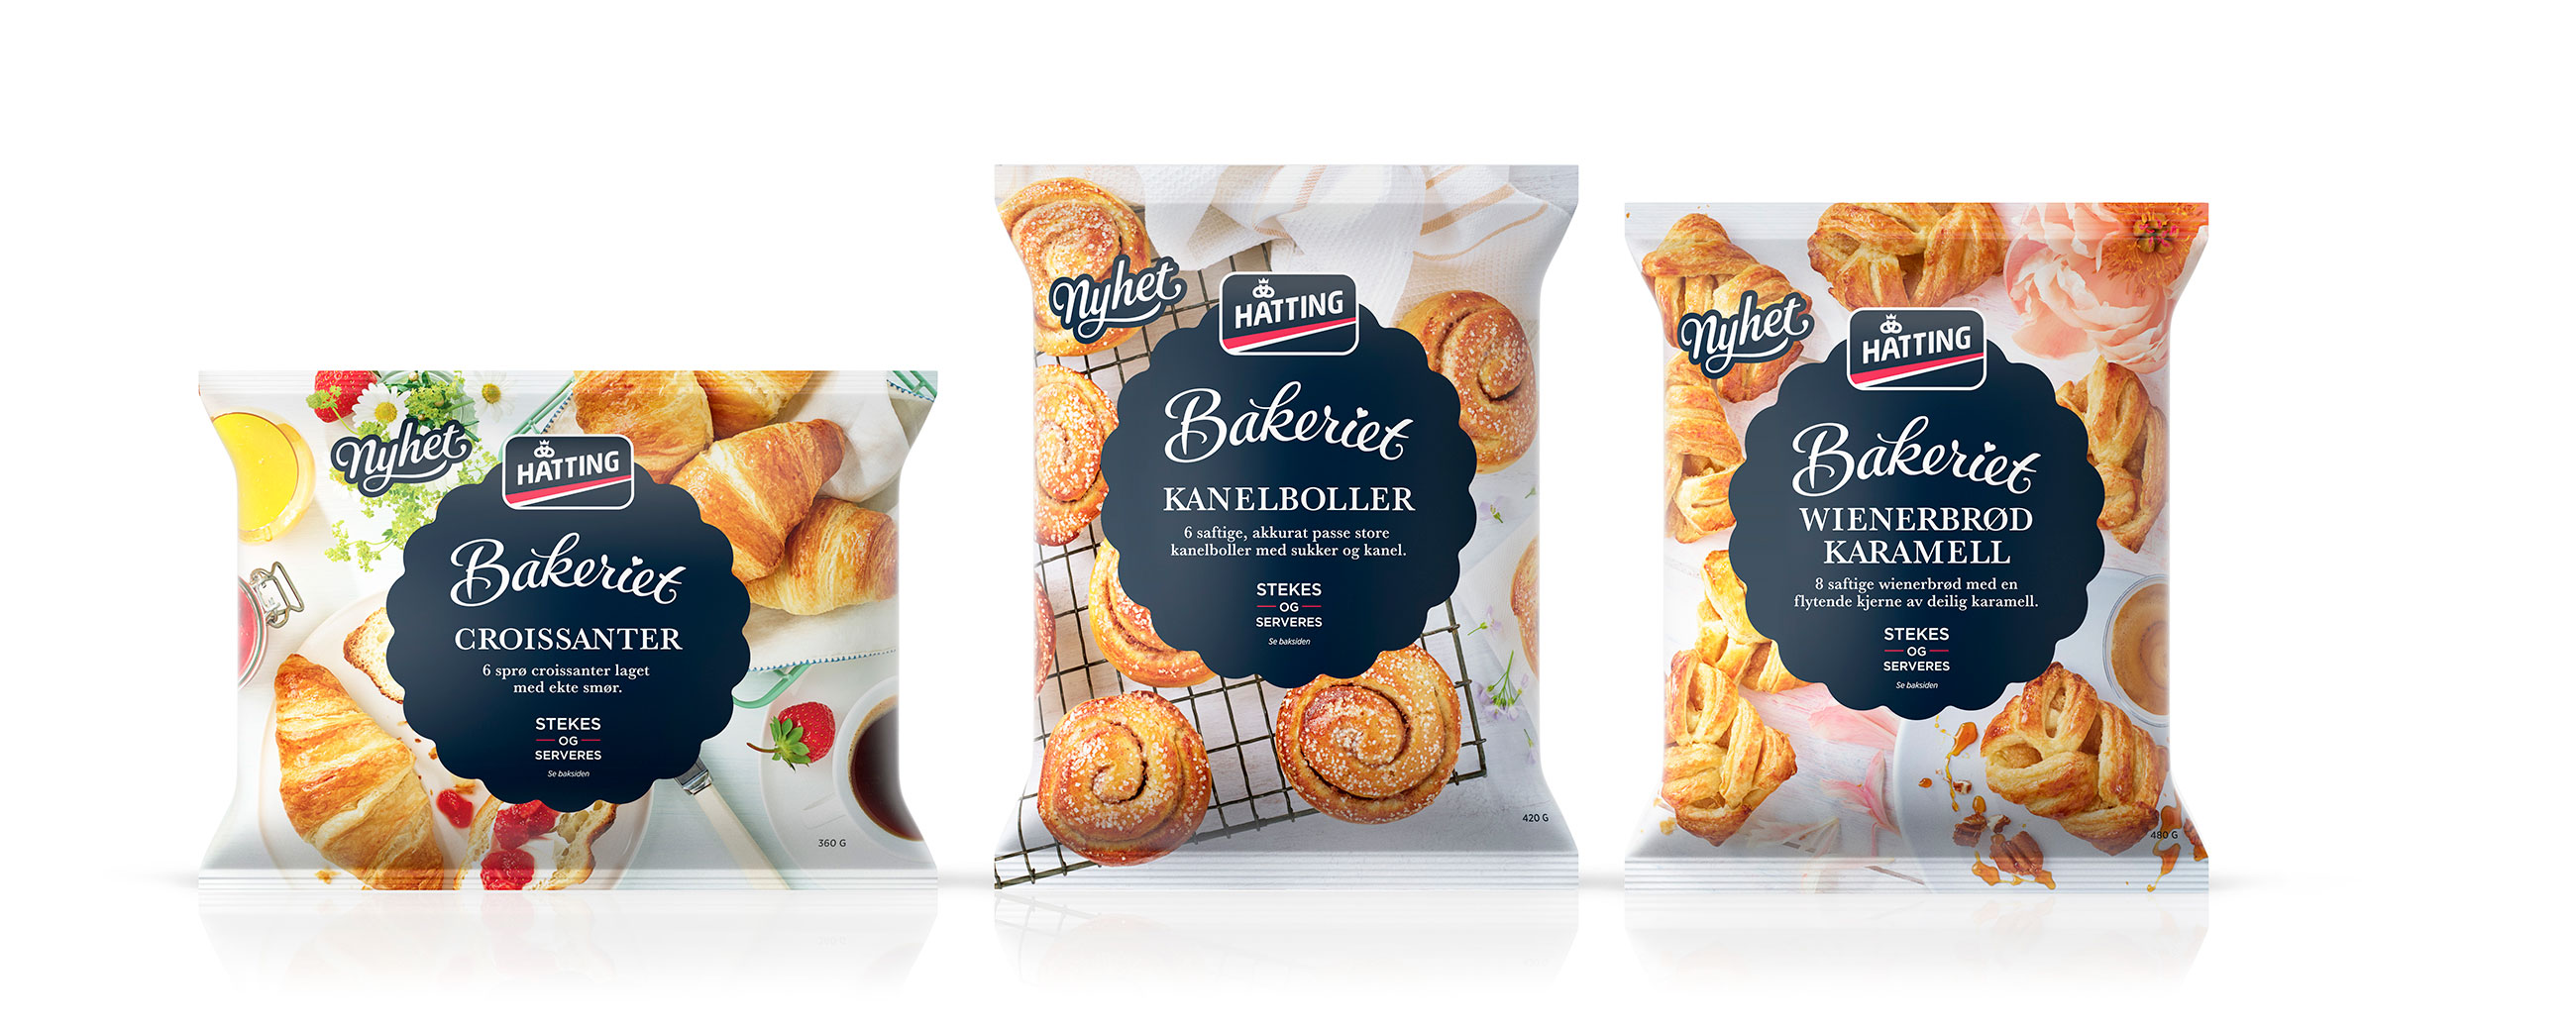 Hatting Bakeriet croissanter, kanelboller og wienerbrød. Emballasje packaging design.